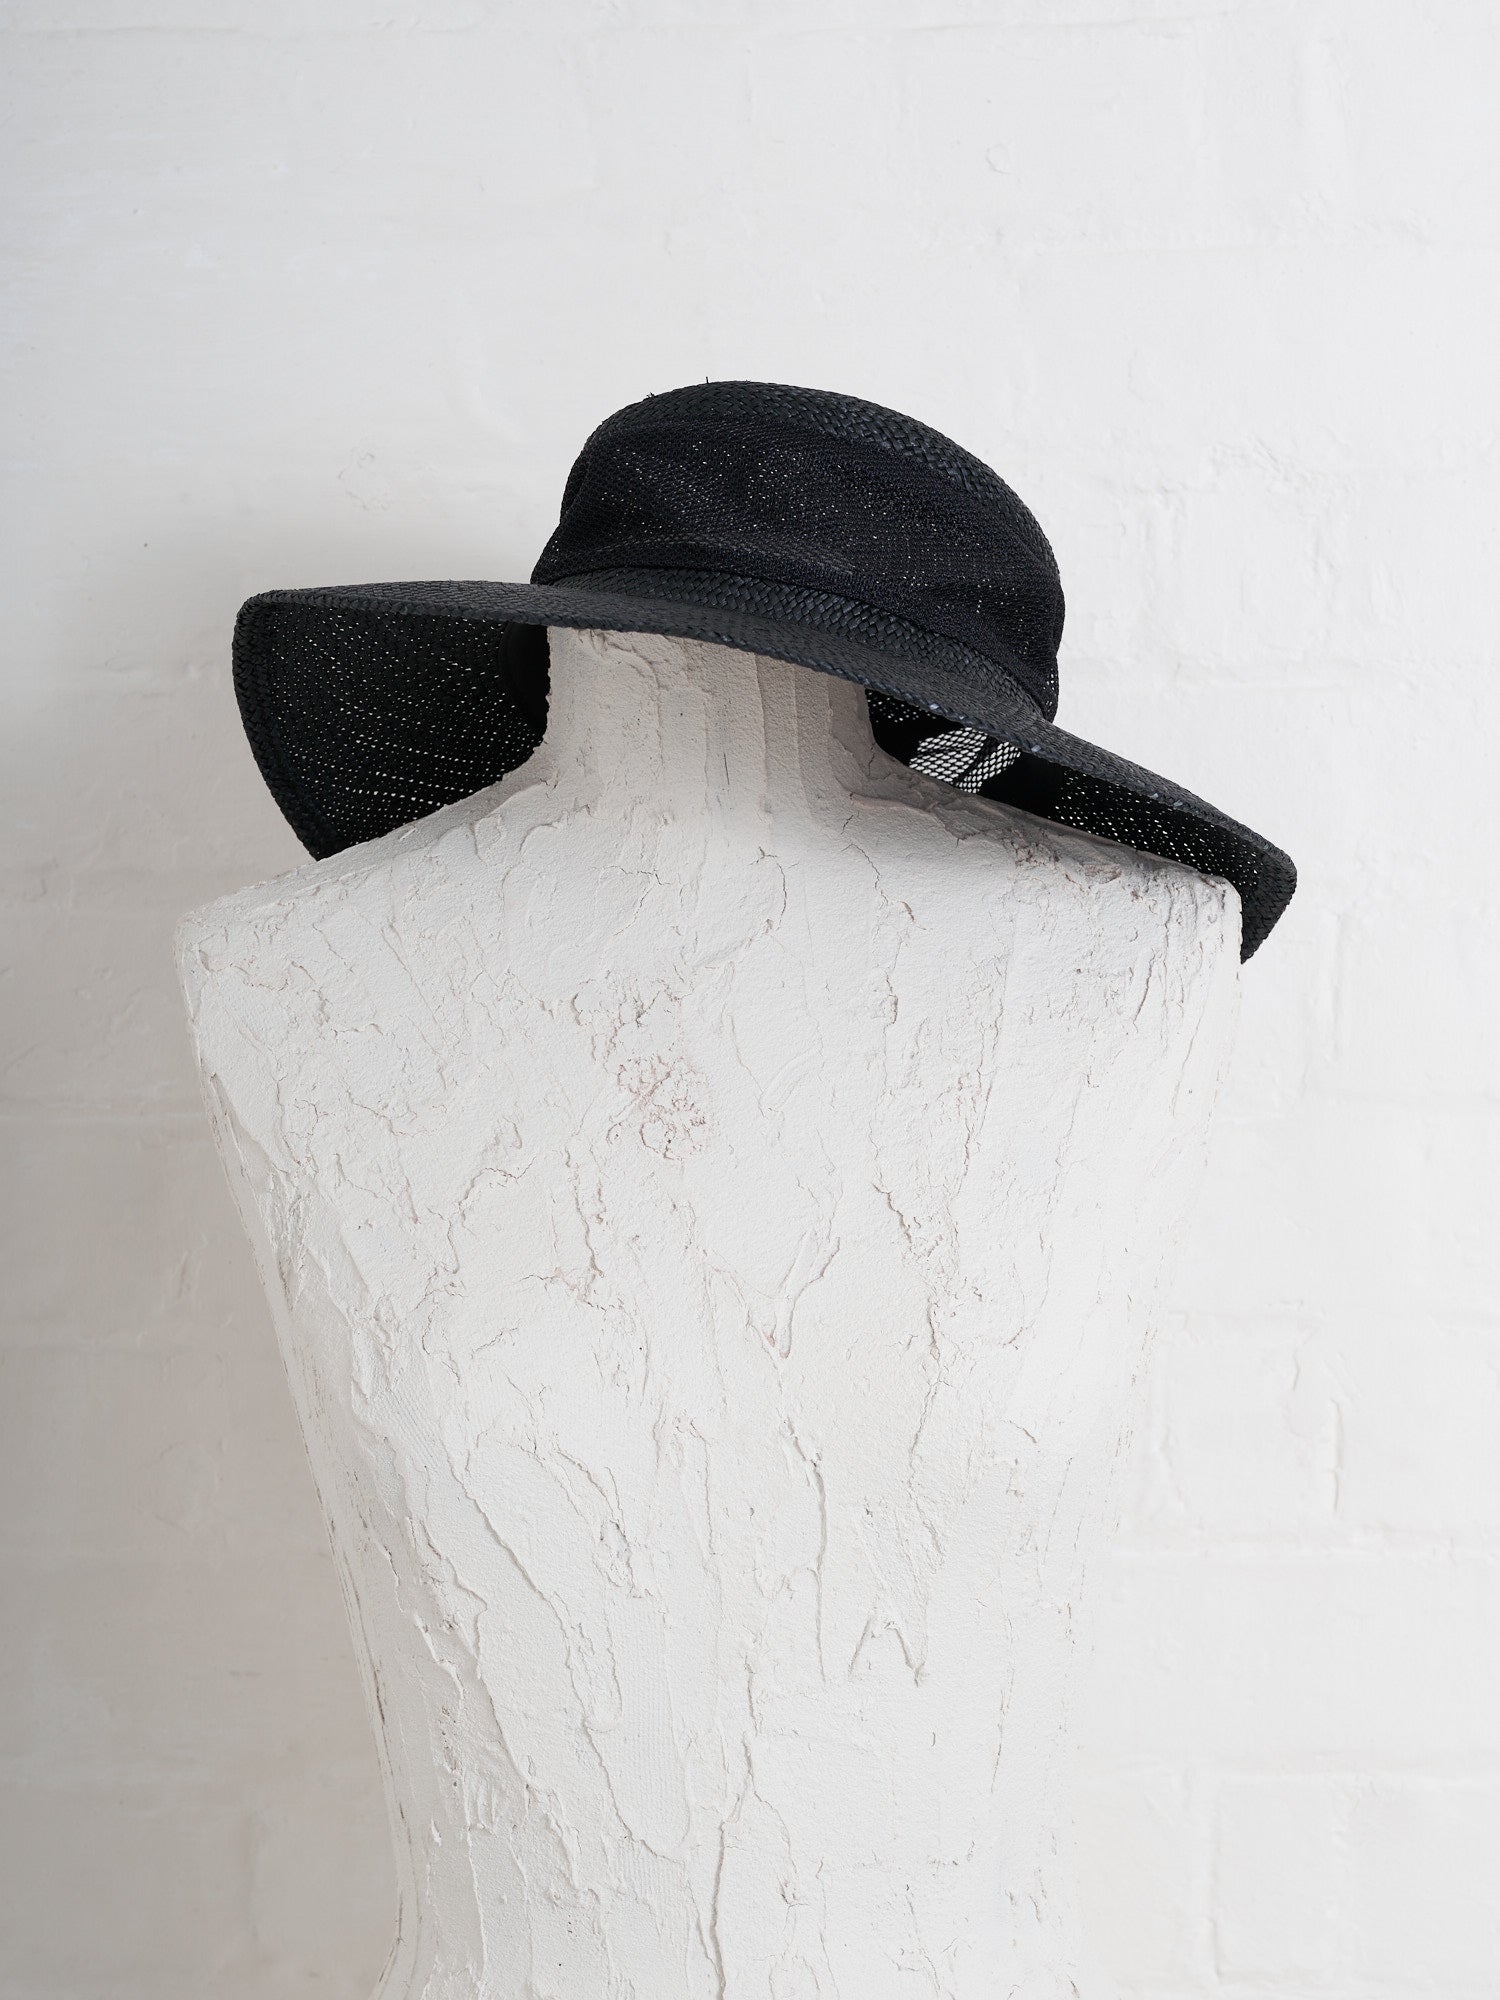 Yoshiki Hishinuma black straw wide brim hat with mesh air panel - size 57.5